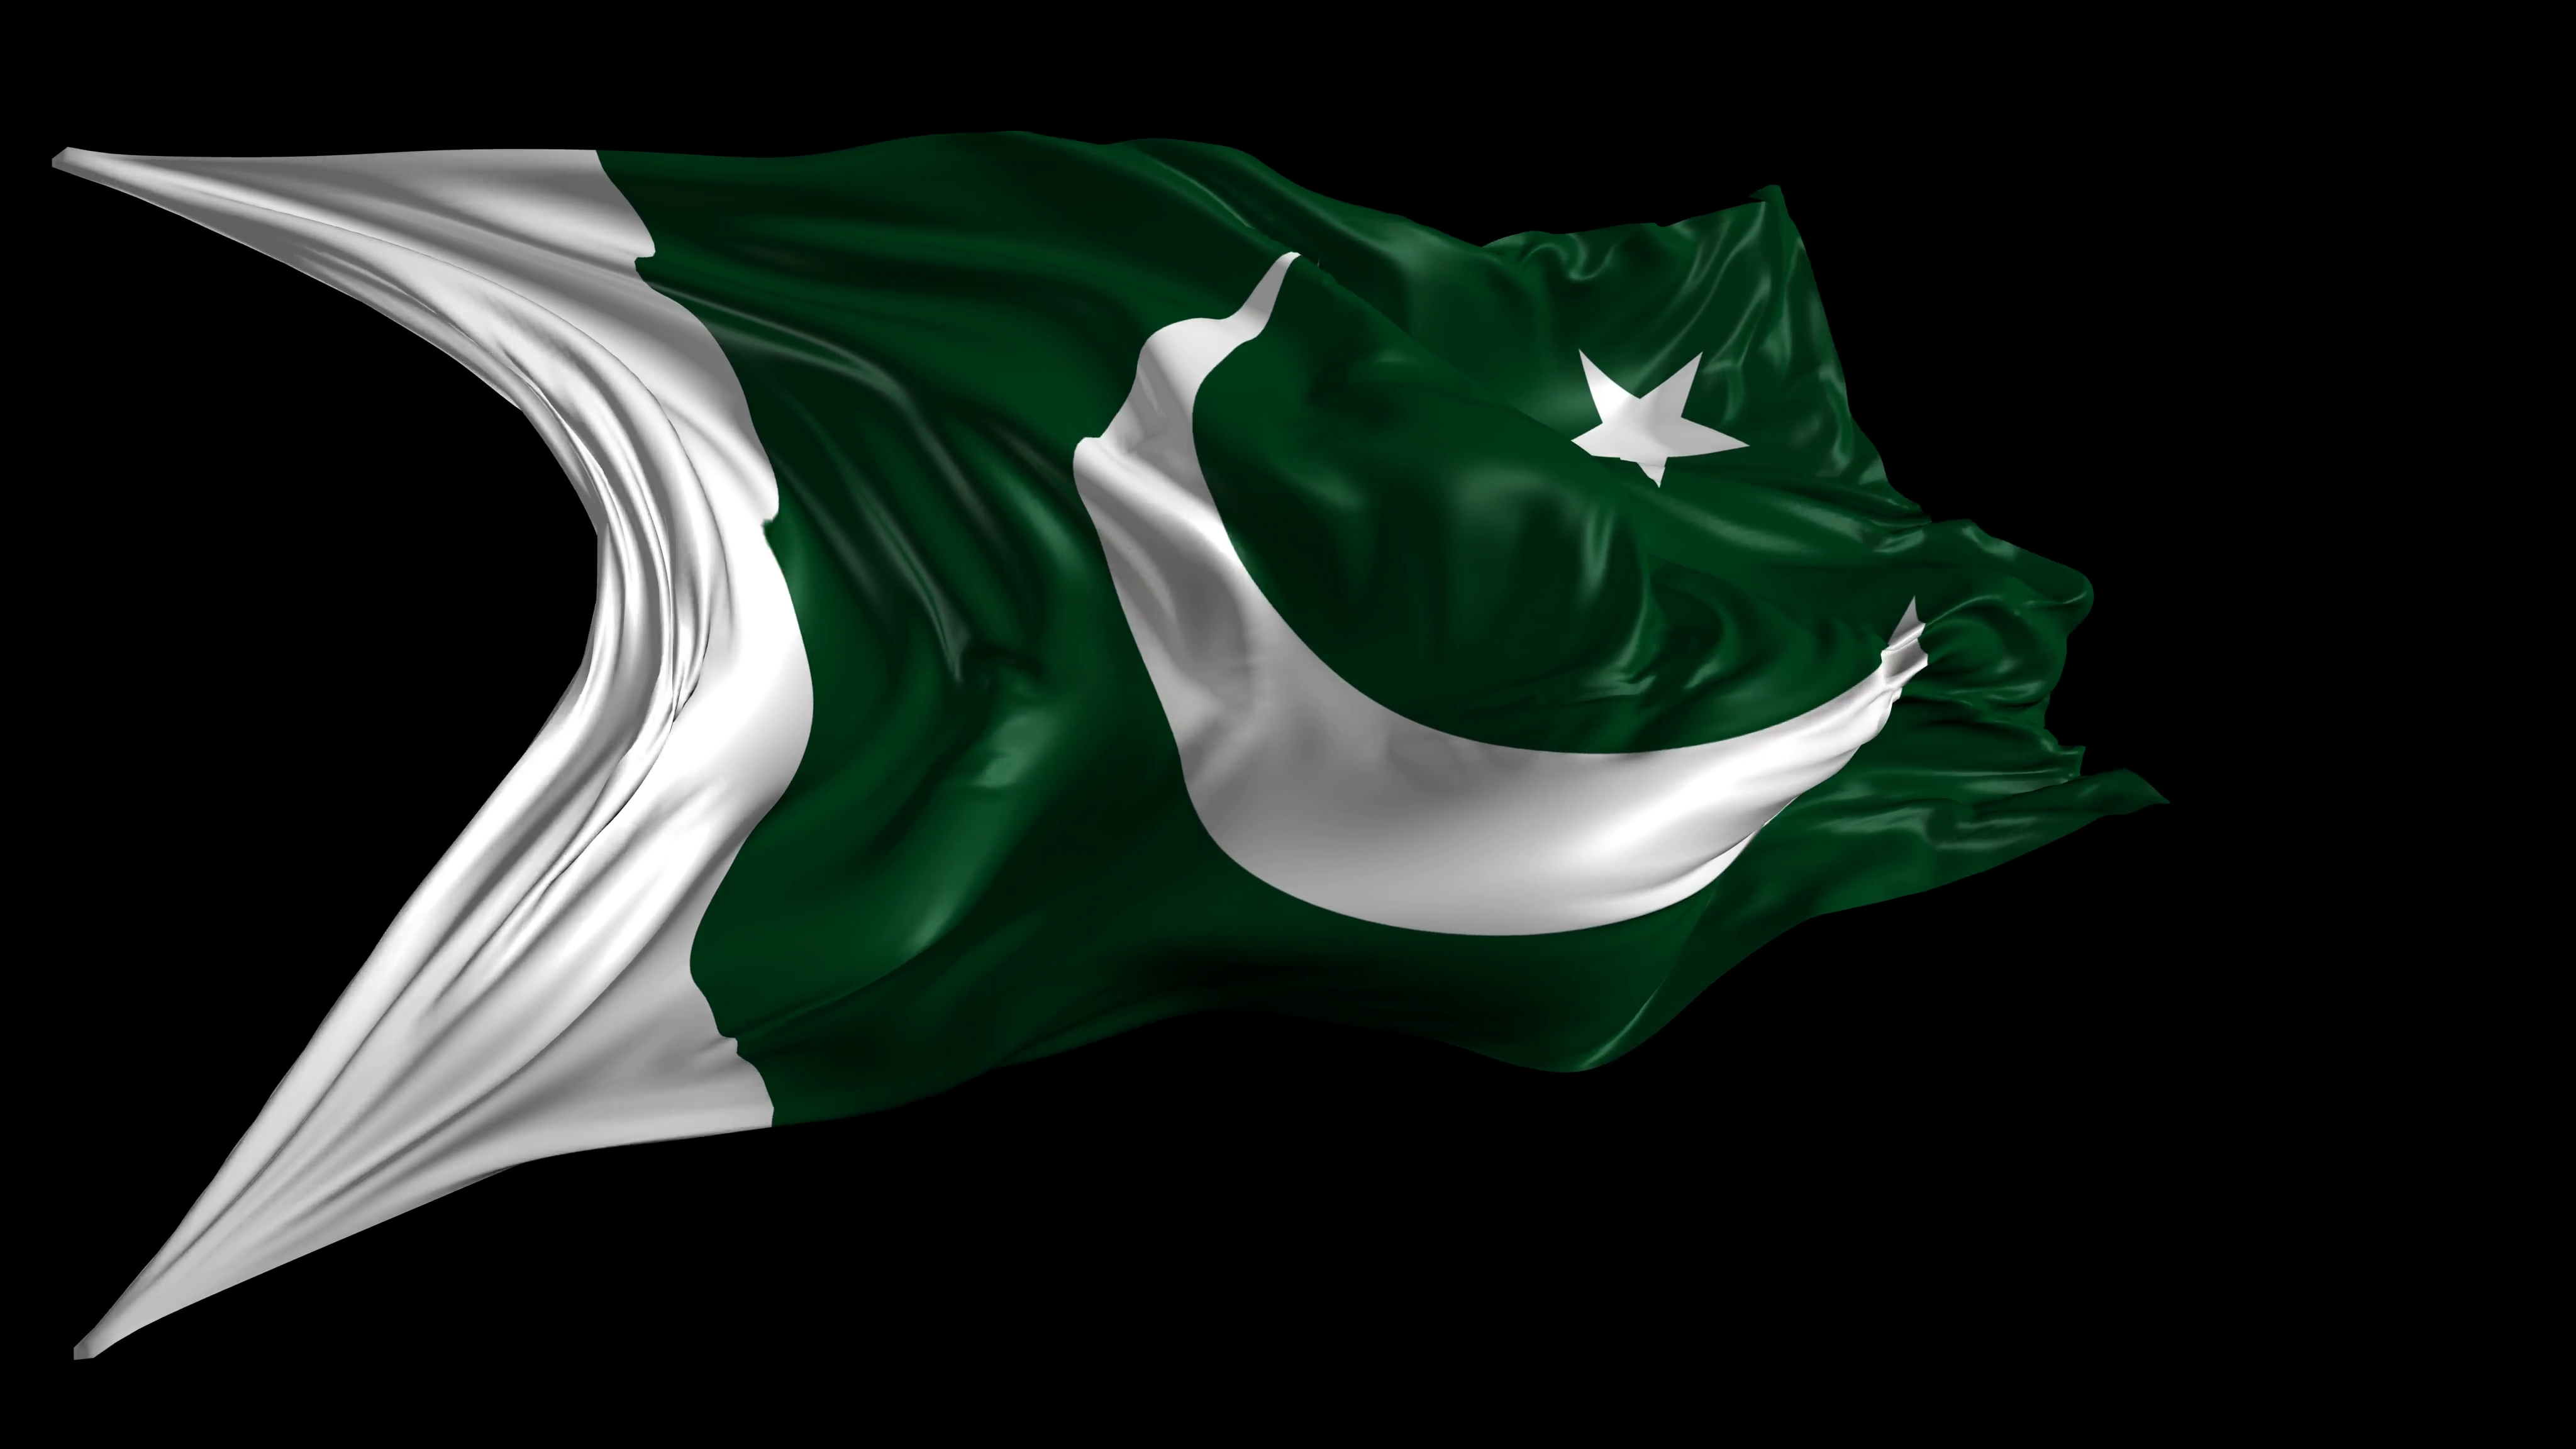 General 4096x2304 Pakistan flag logo minimalism digital art simple background